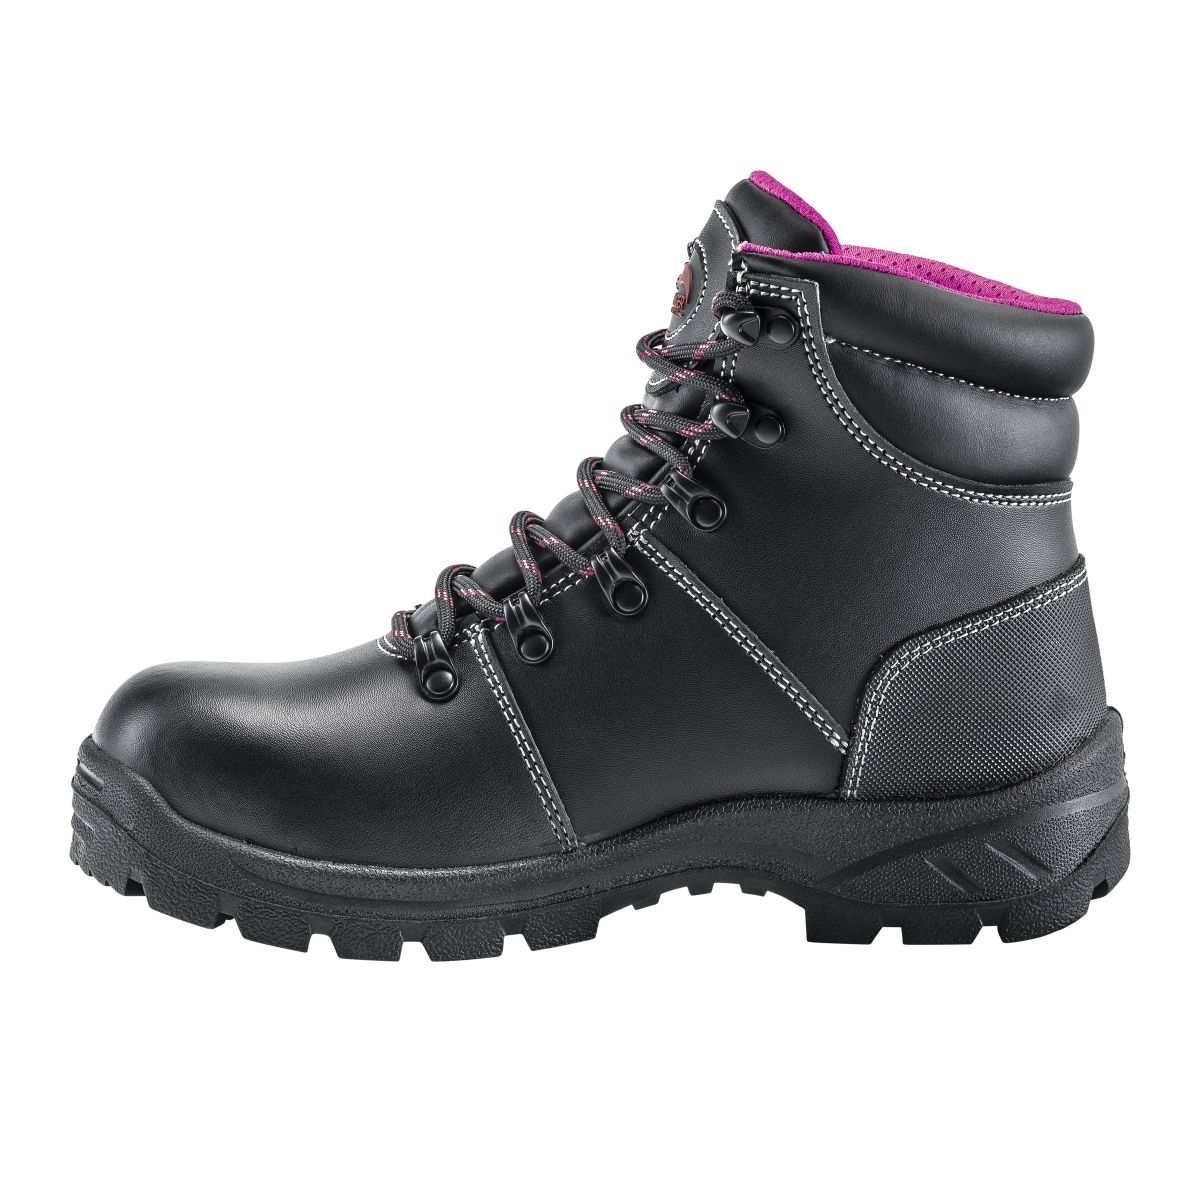 FSI FOOTWEAR SPECIALTIES INTERNATIONAL NAUTILUS Avenger Women's 6 Builder Steel Toe Waterproof EH Work Boots Black - A8124 BLACK - BLACK, 6